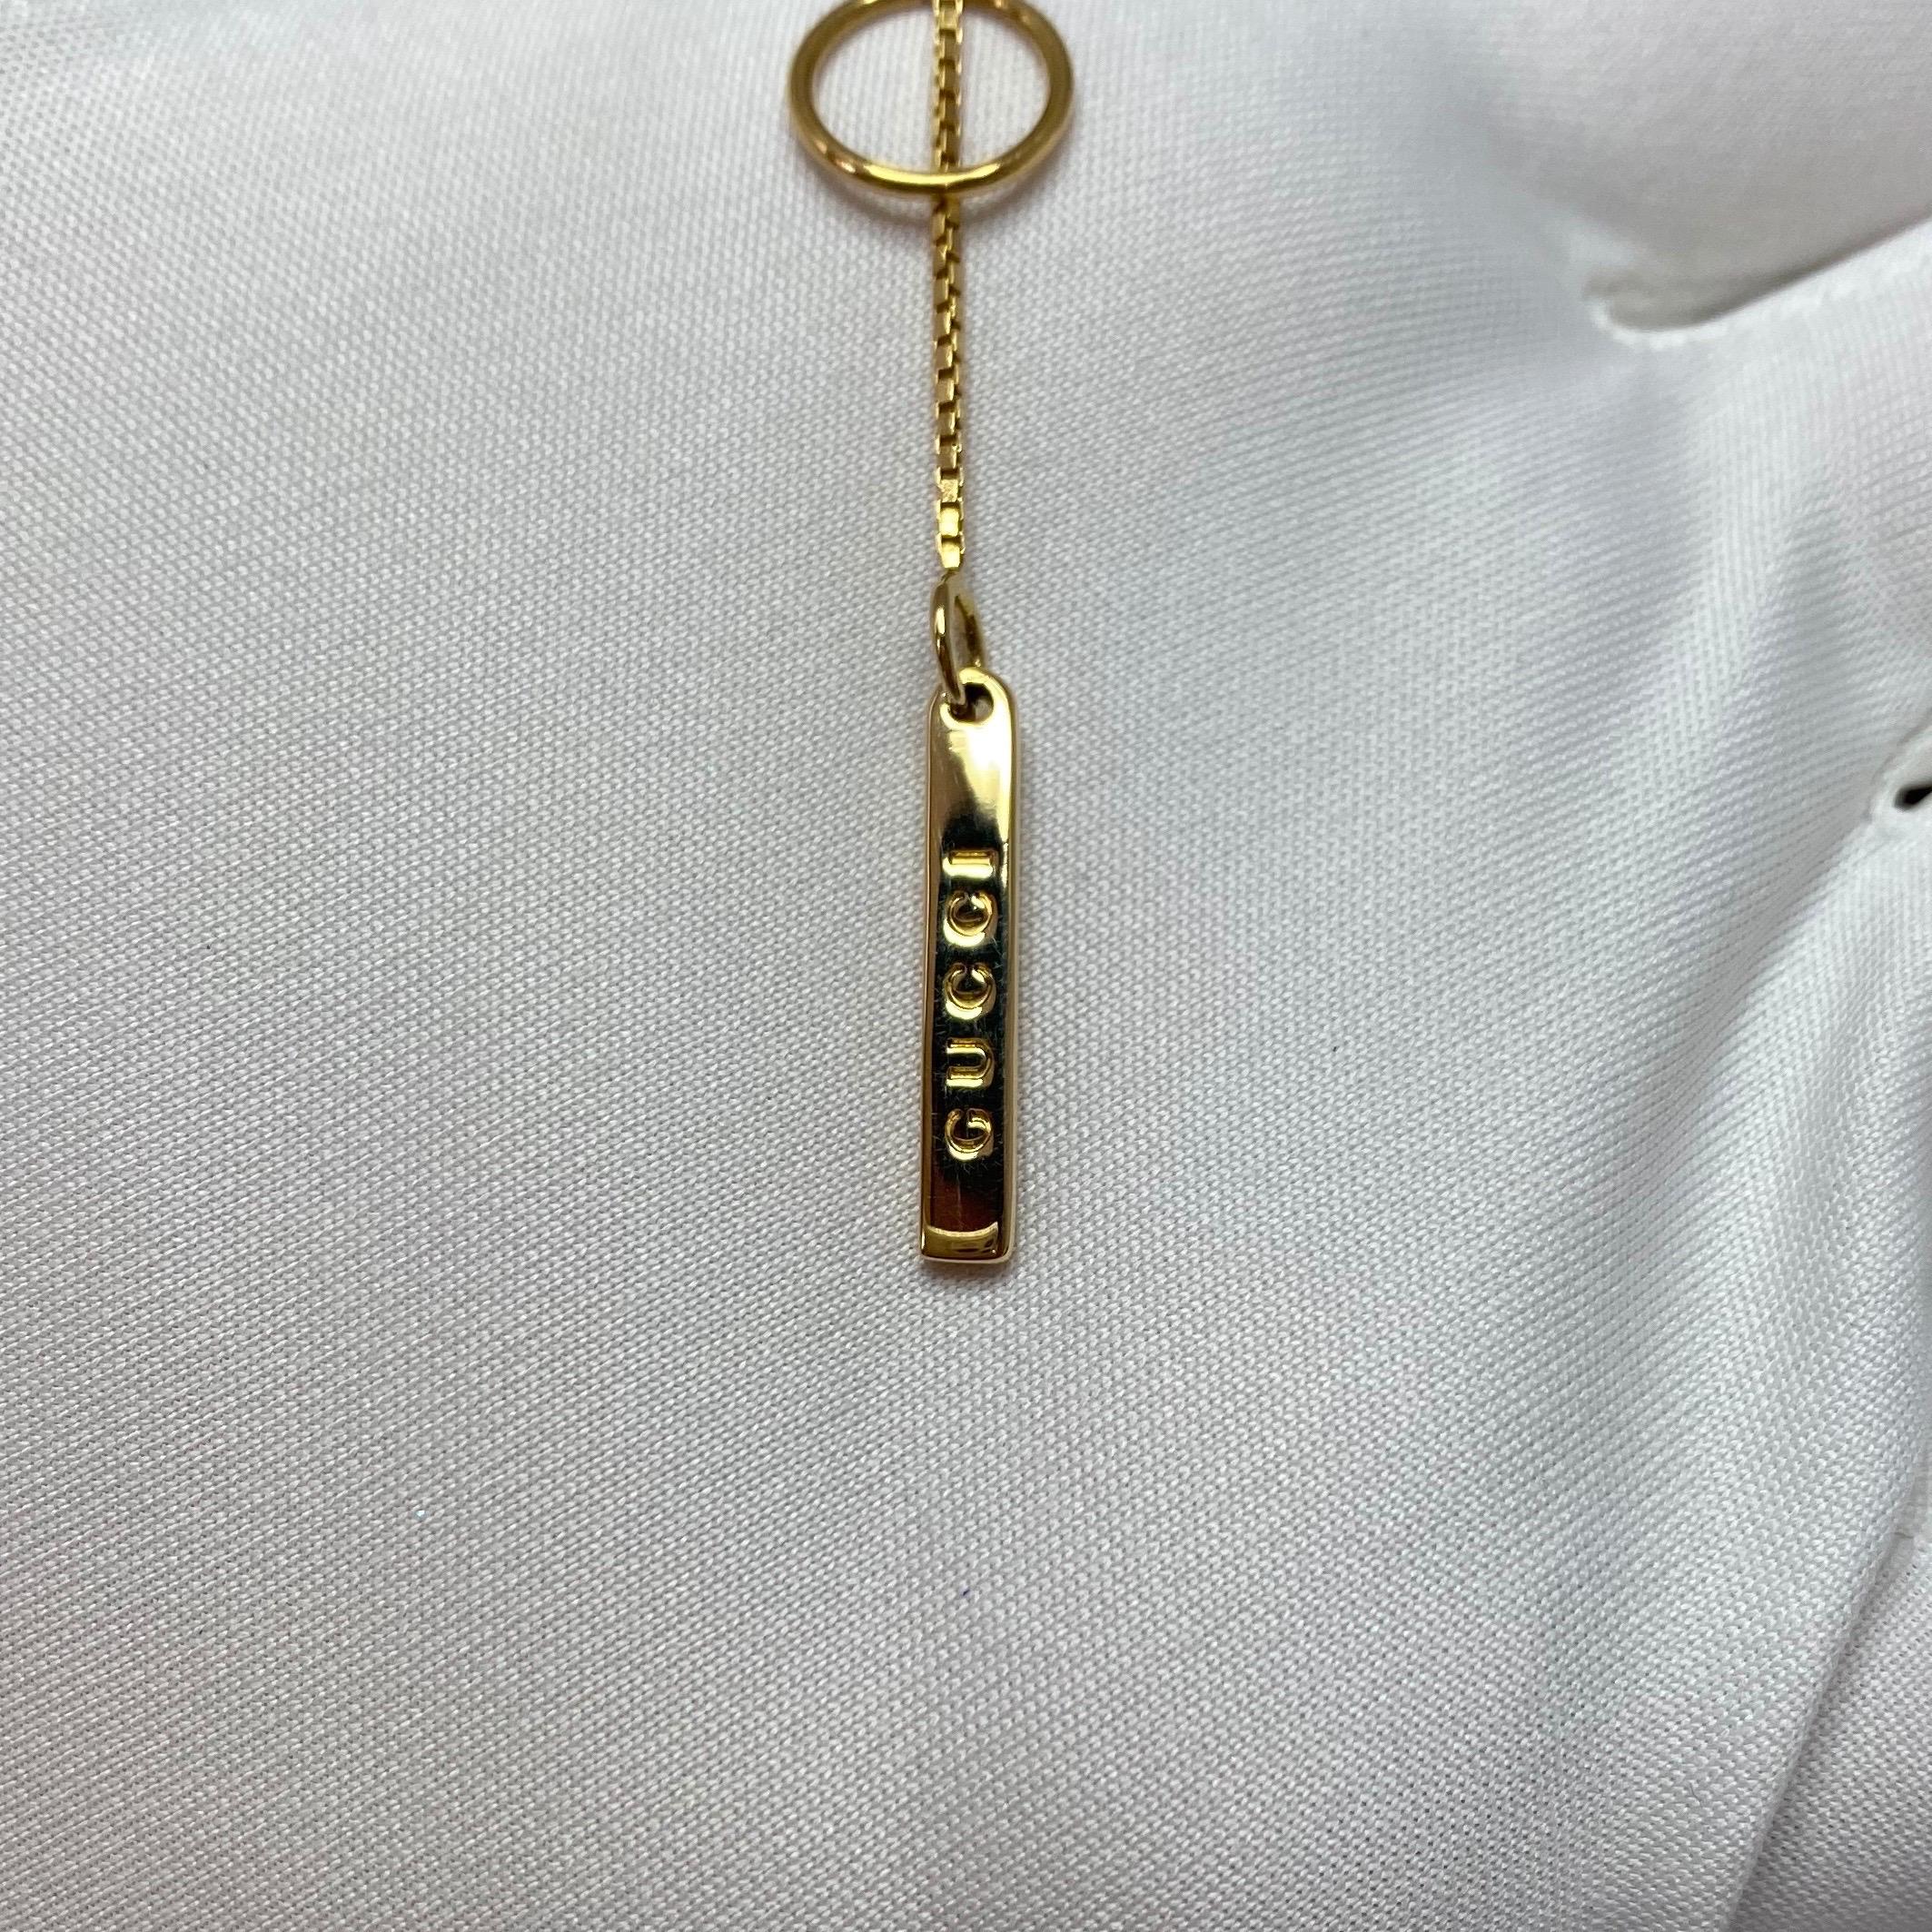 Gucci 18 Karat Yellow Gold Bar Lariat Pendant Necklace with Original Gucci Box 6